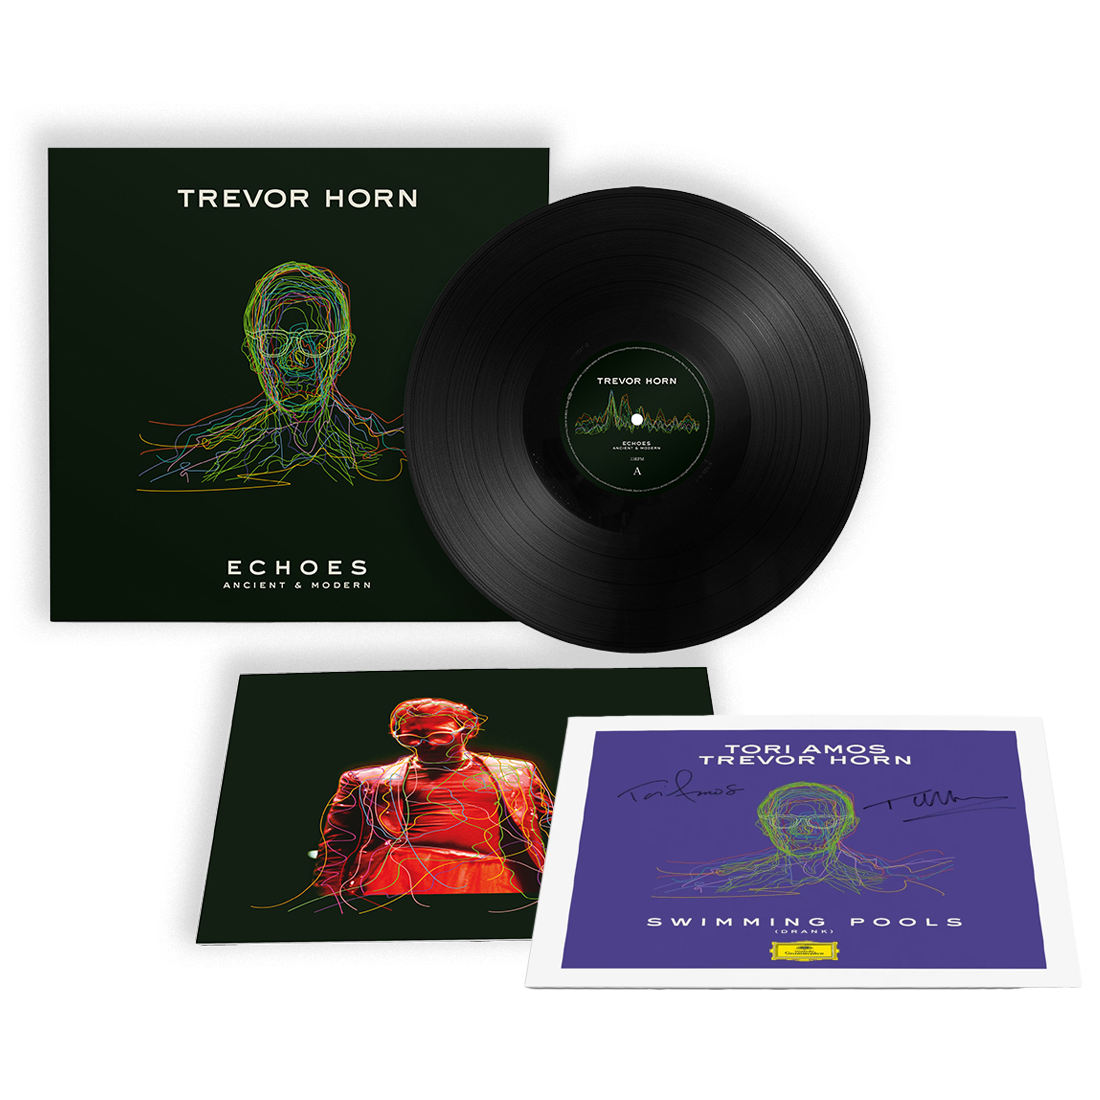 Echoes - Ancient & Modern: Vinyl LP + Signed Print (by Trevor Horn & Tori Amos)